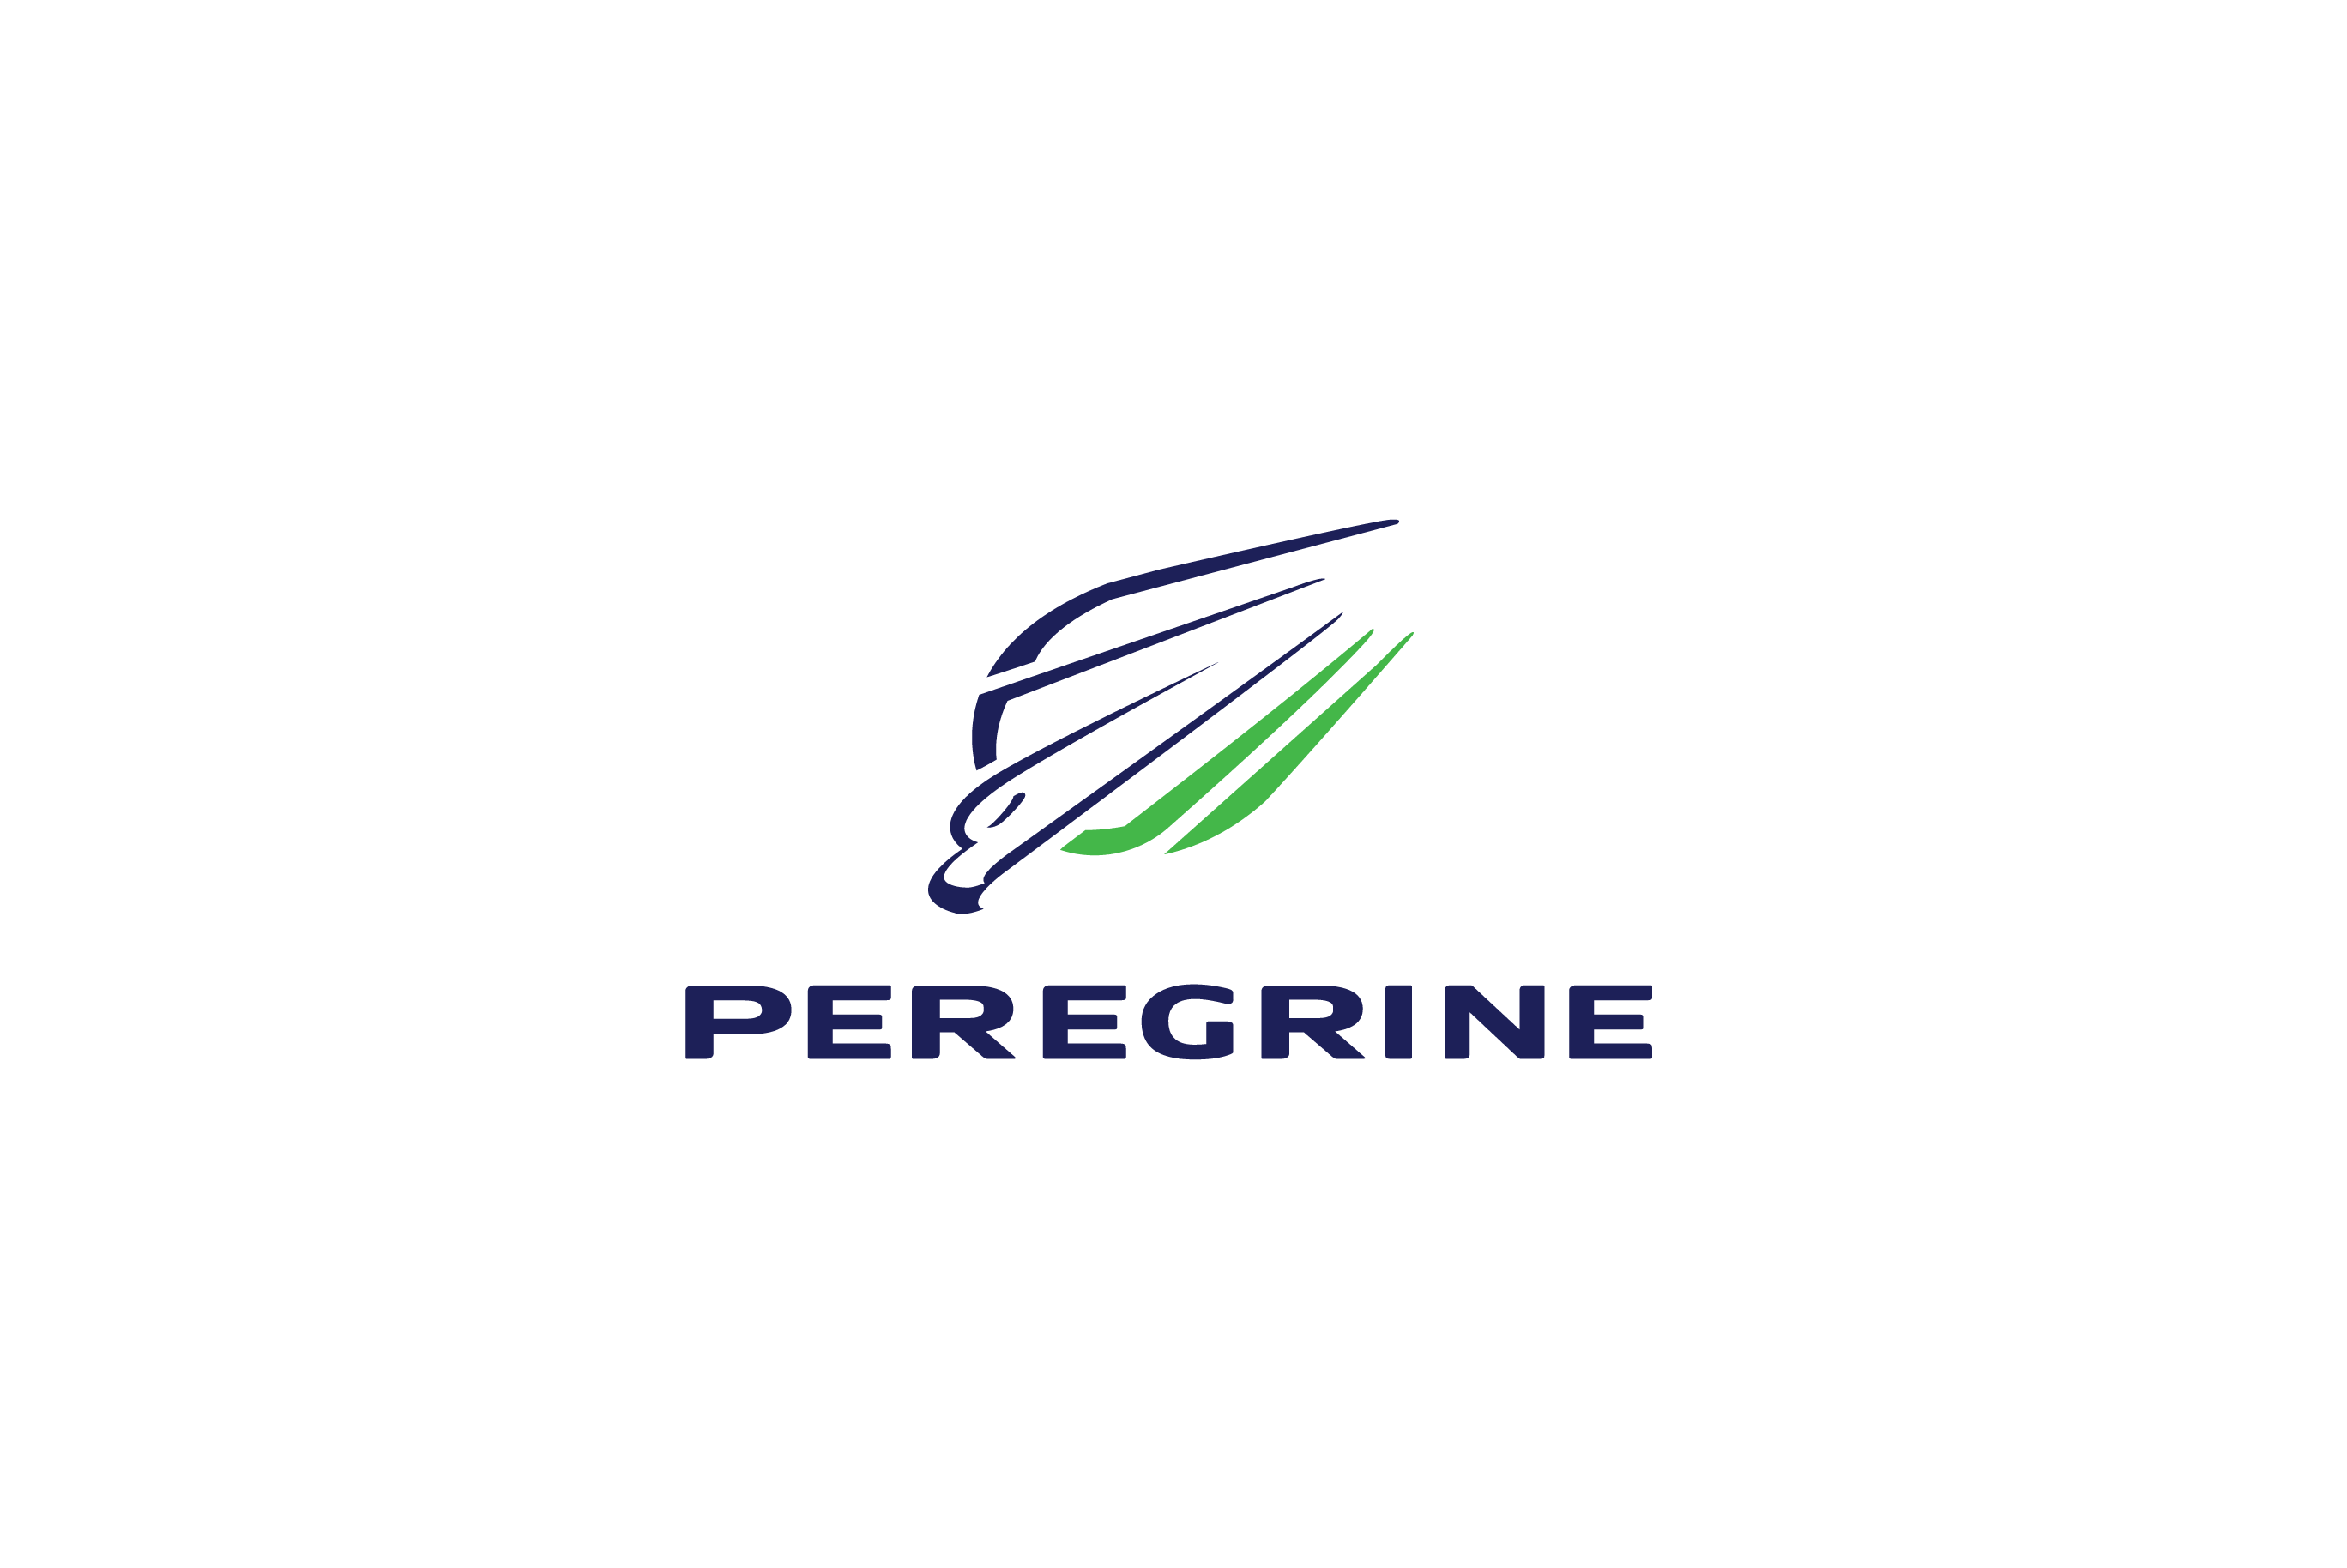 Peregrine Logo - Peregrine falcon Logos